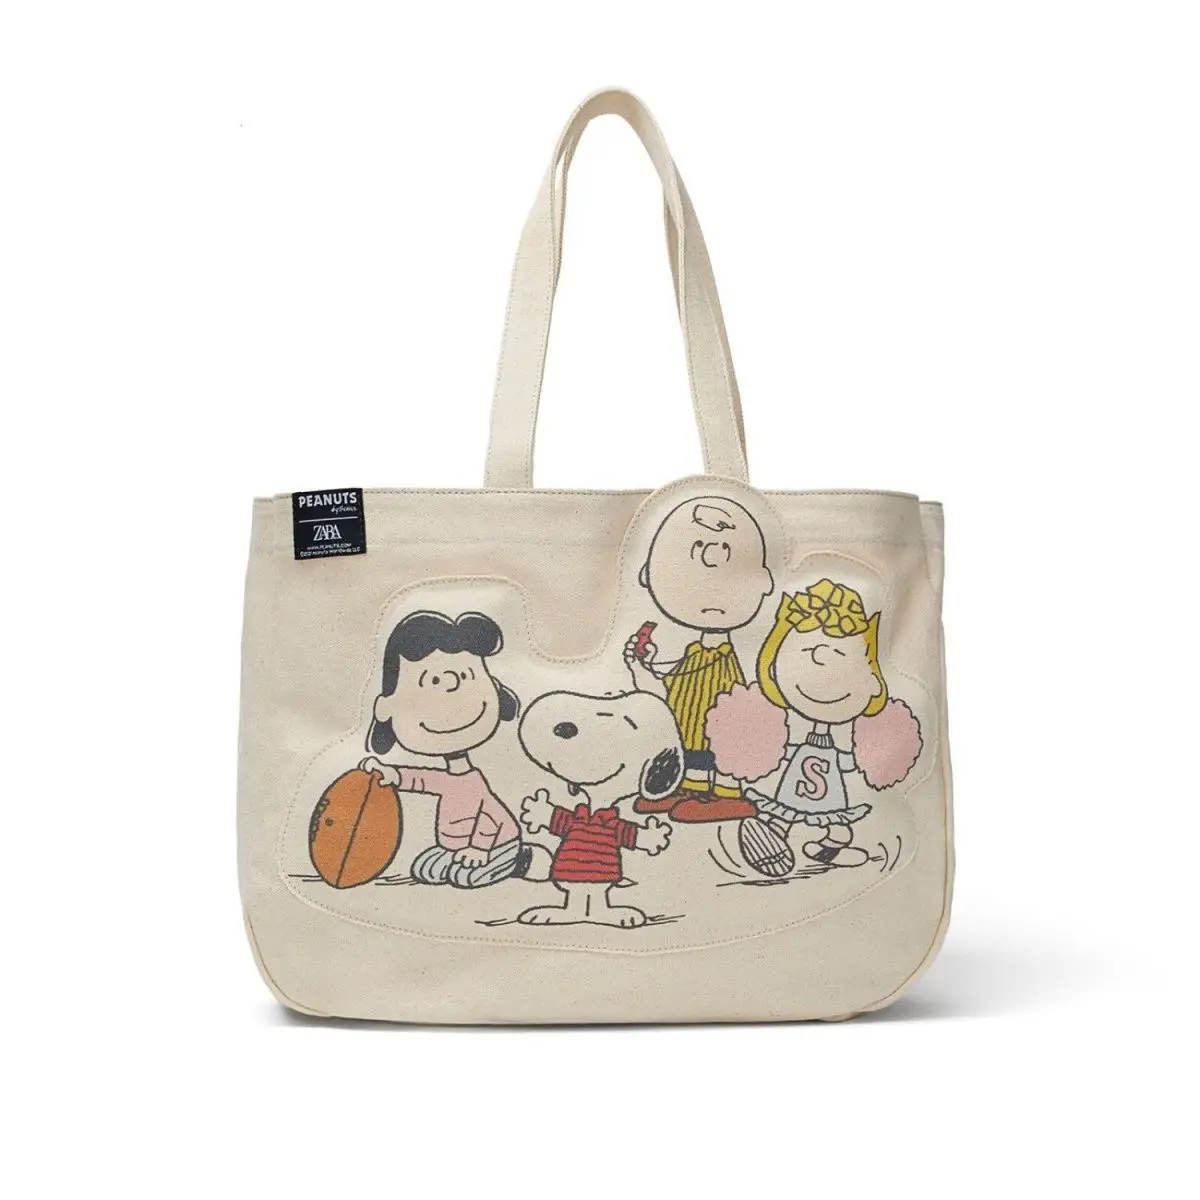 

Kawaii Anime Cartoon Series Snoopy New Canvas Bag Large Capacity Shopping Bag Double sided Cartoon Pattern Tote Shoulder Handbag